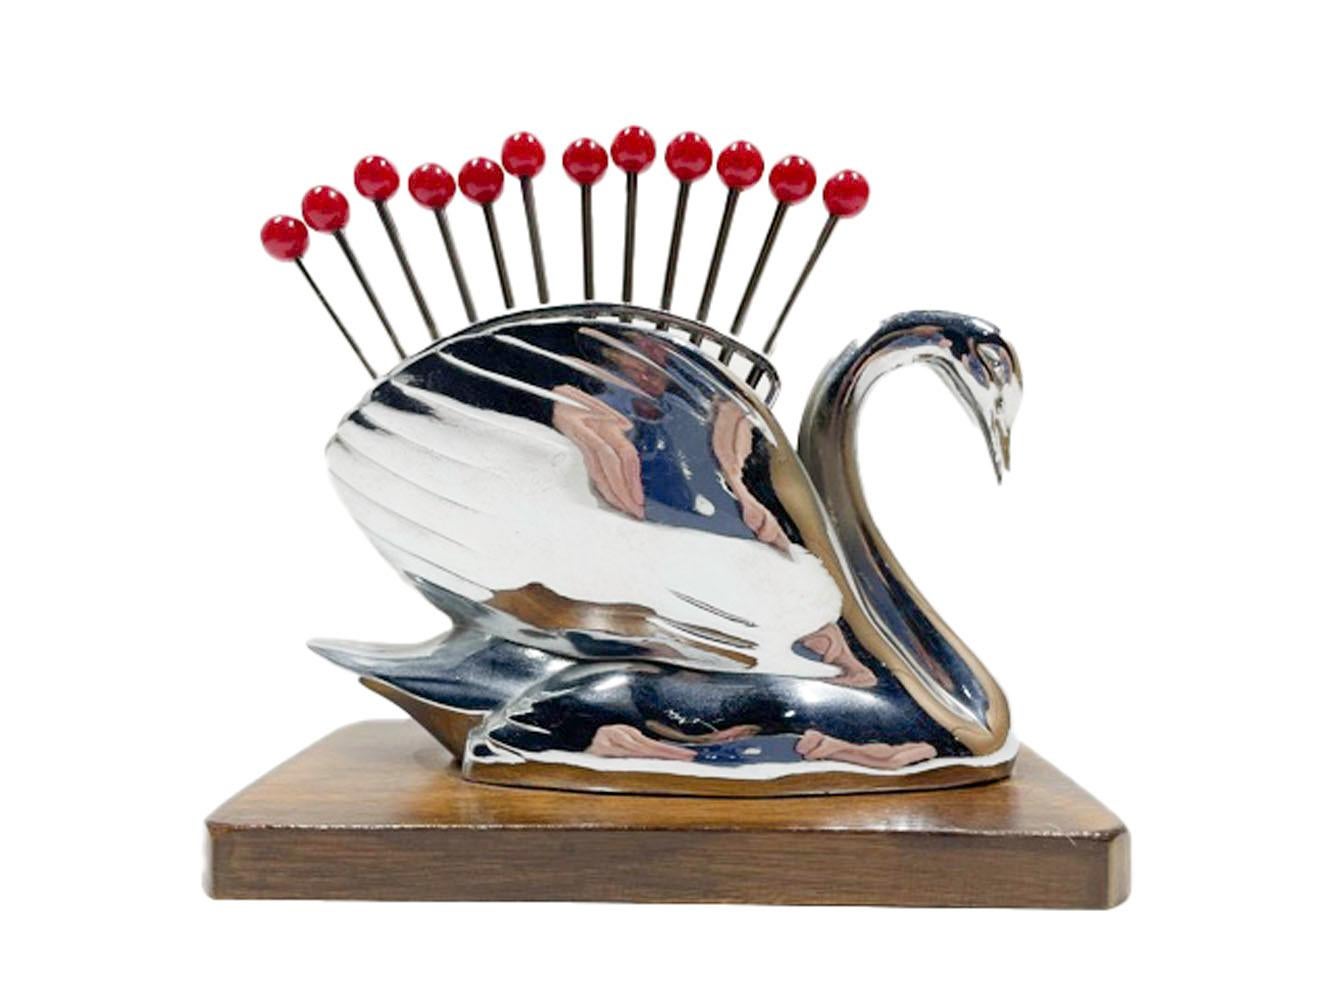 20th Century Set of 12 Art Deco Chrome and Lucite Cocktail Picks in Chromed Swan Holder